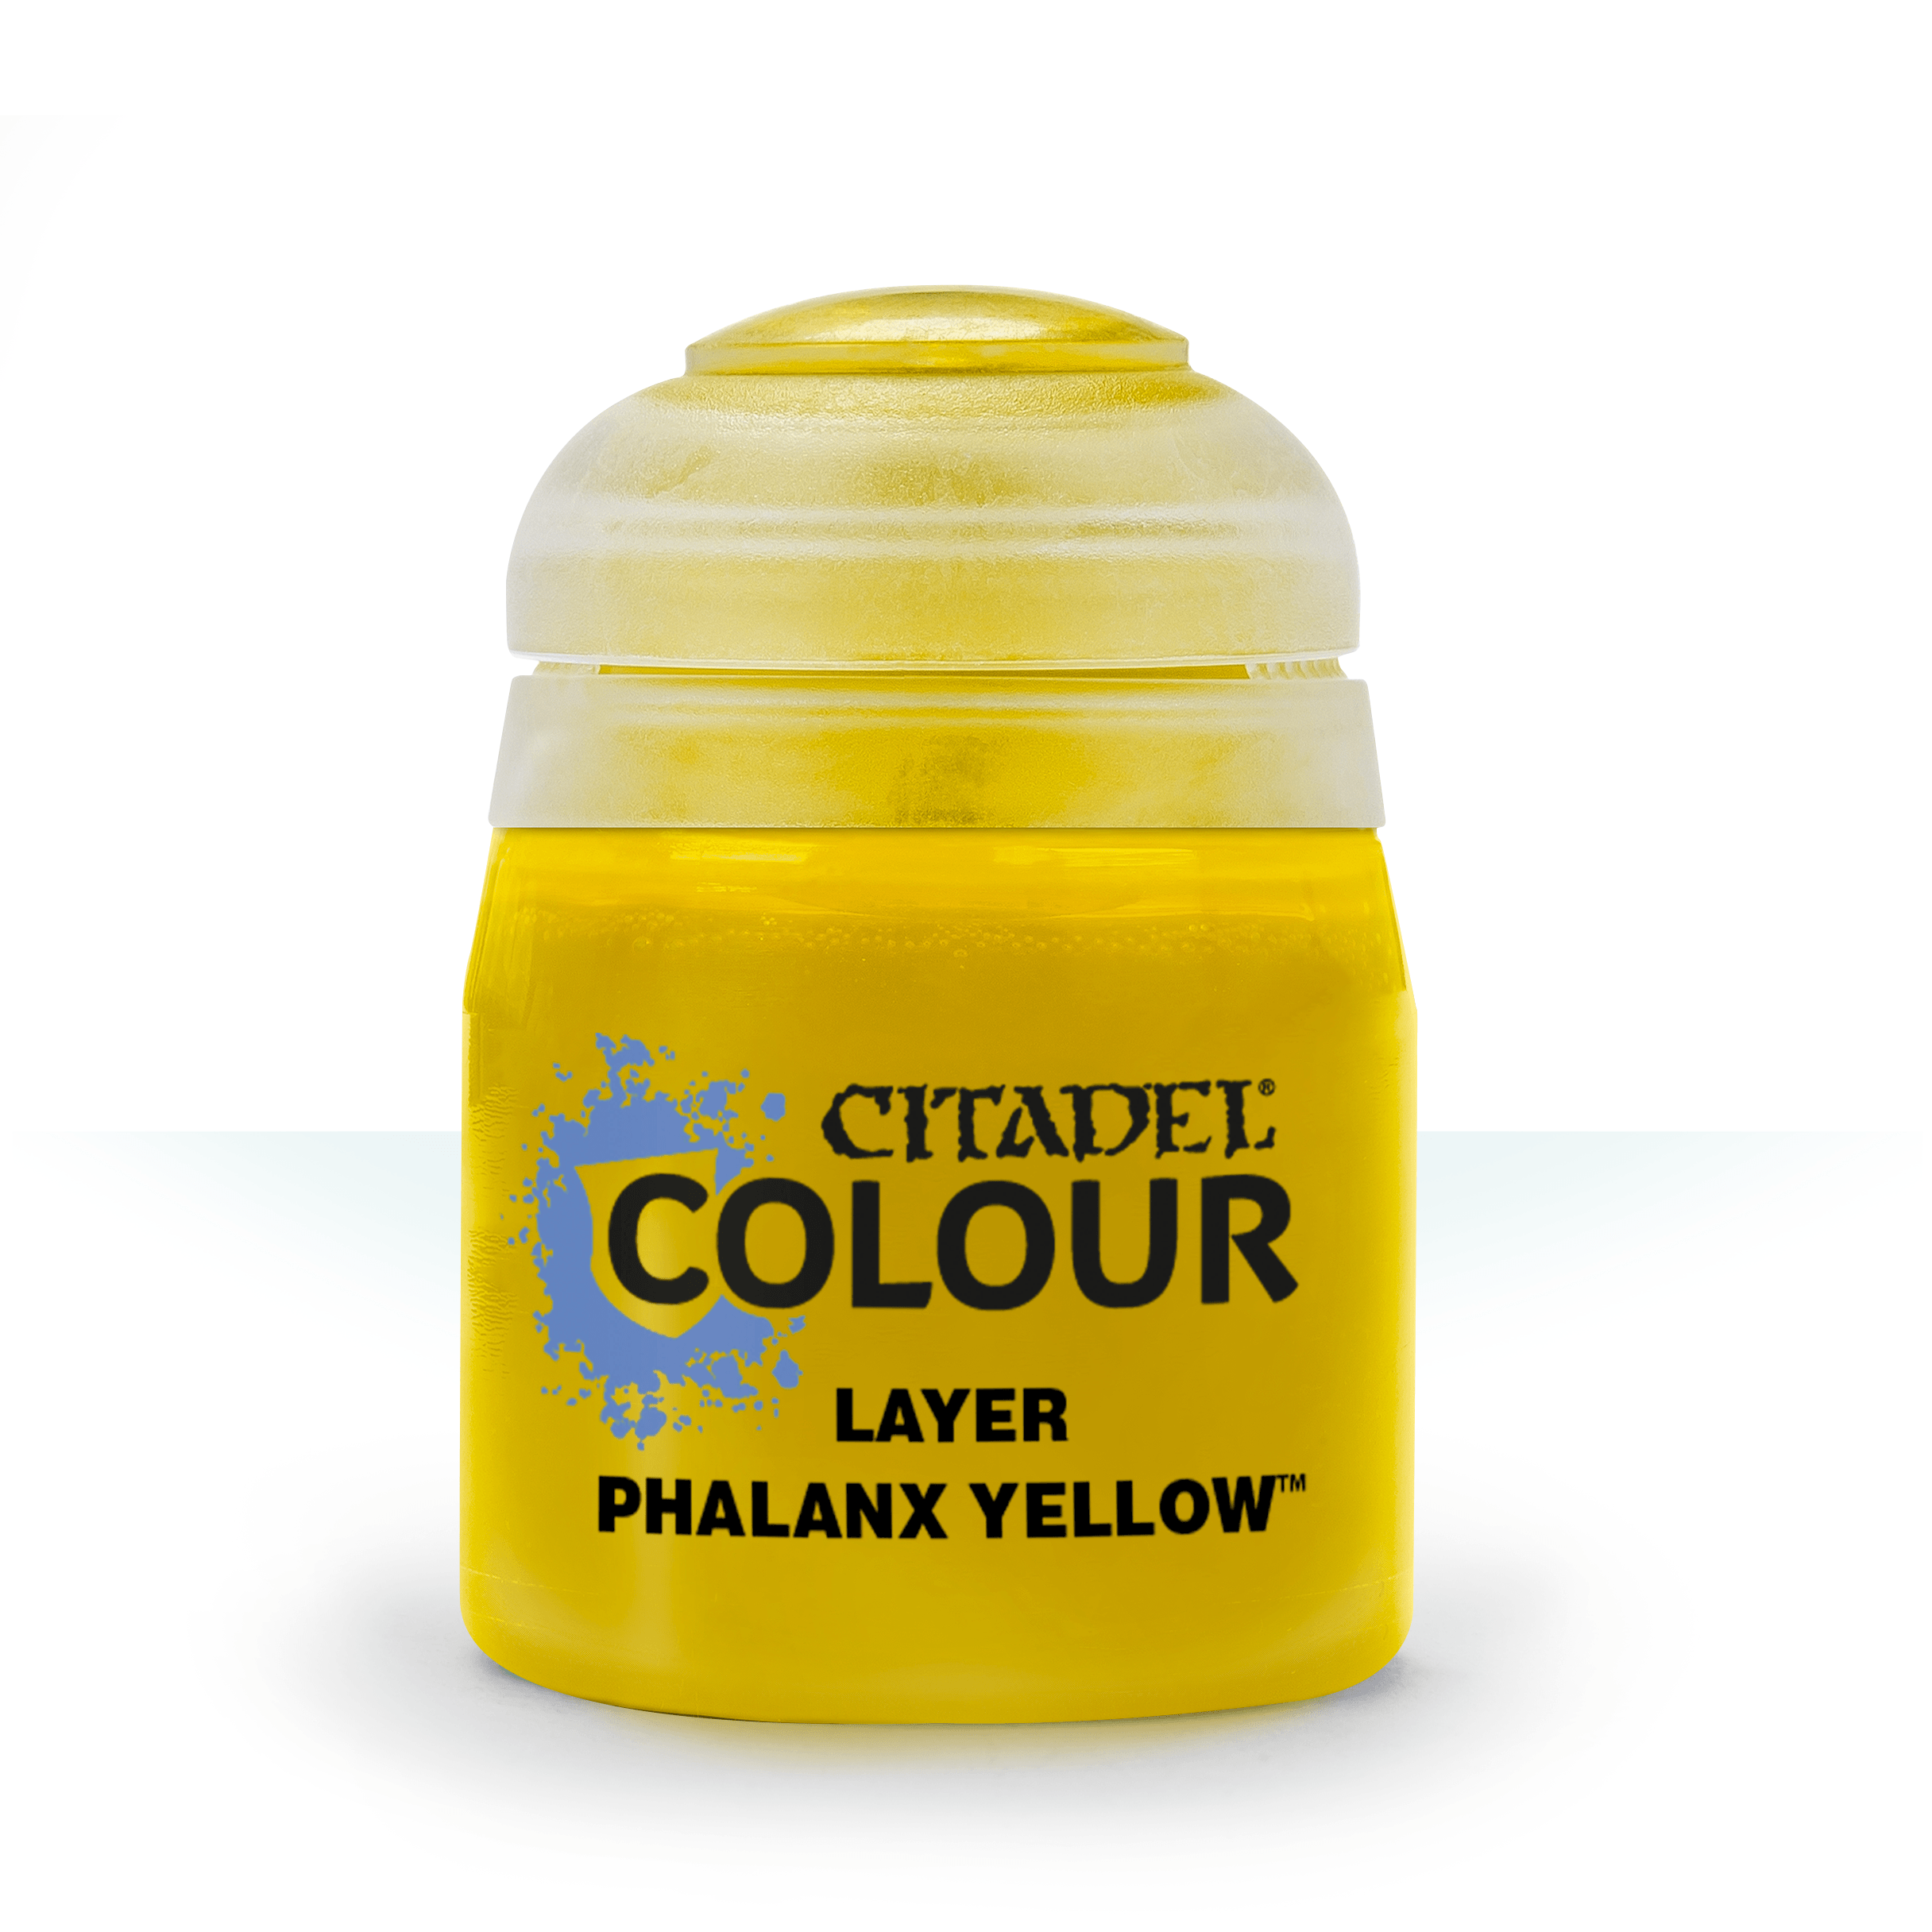 Phalanx Yellow - Citadel Layer Colour